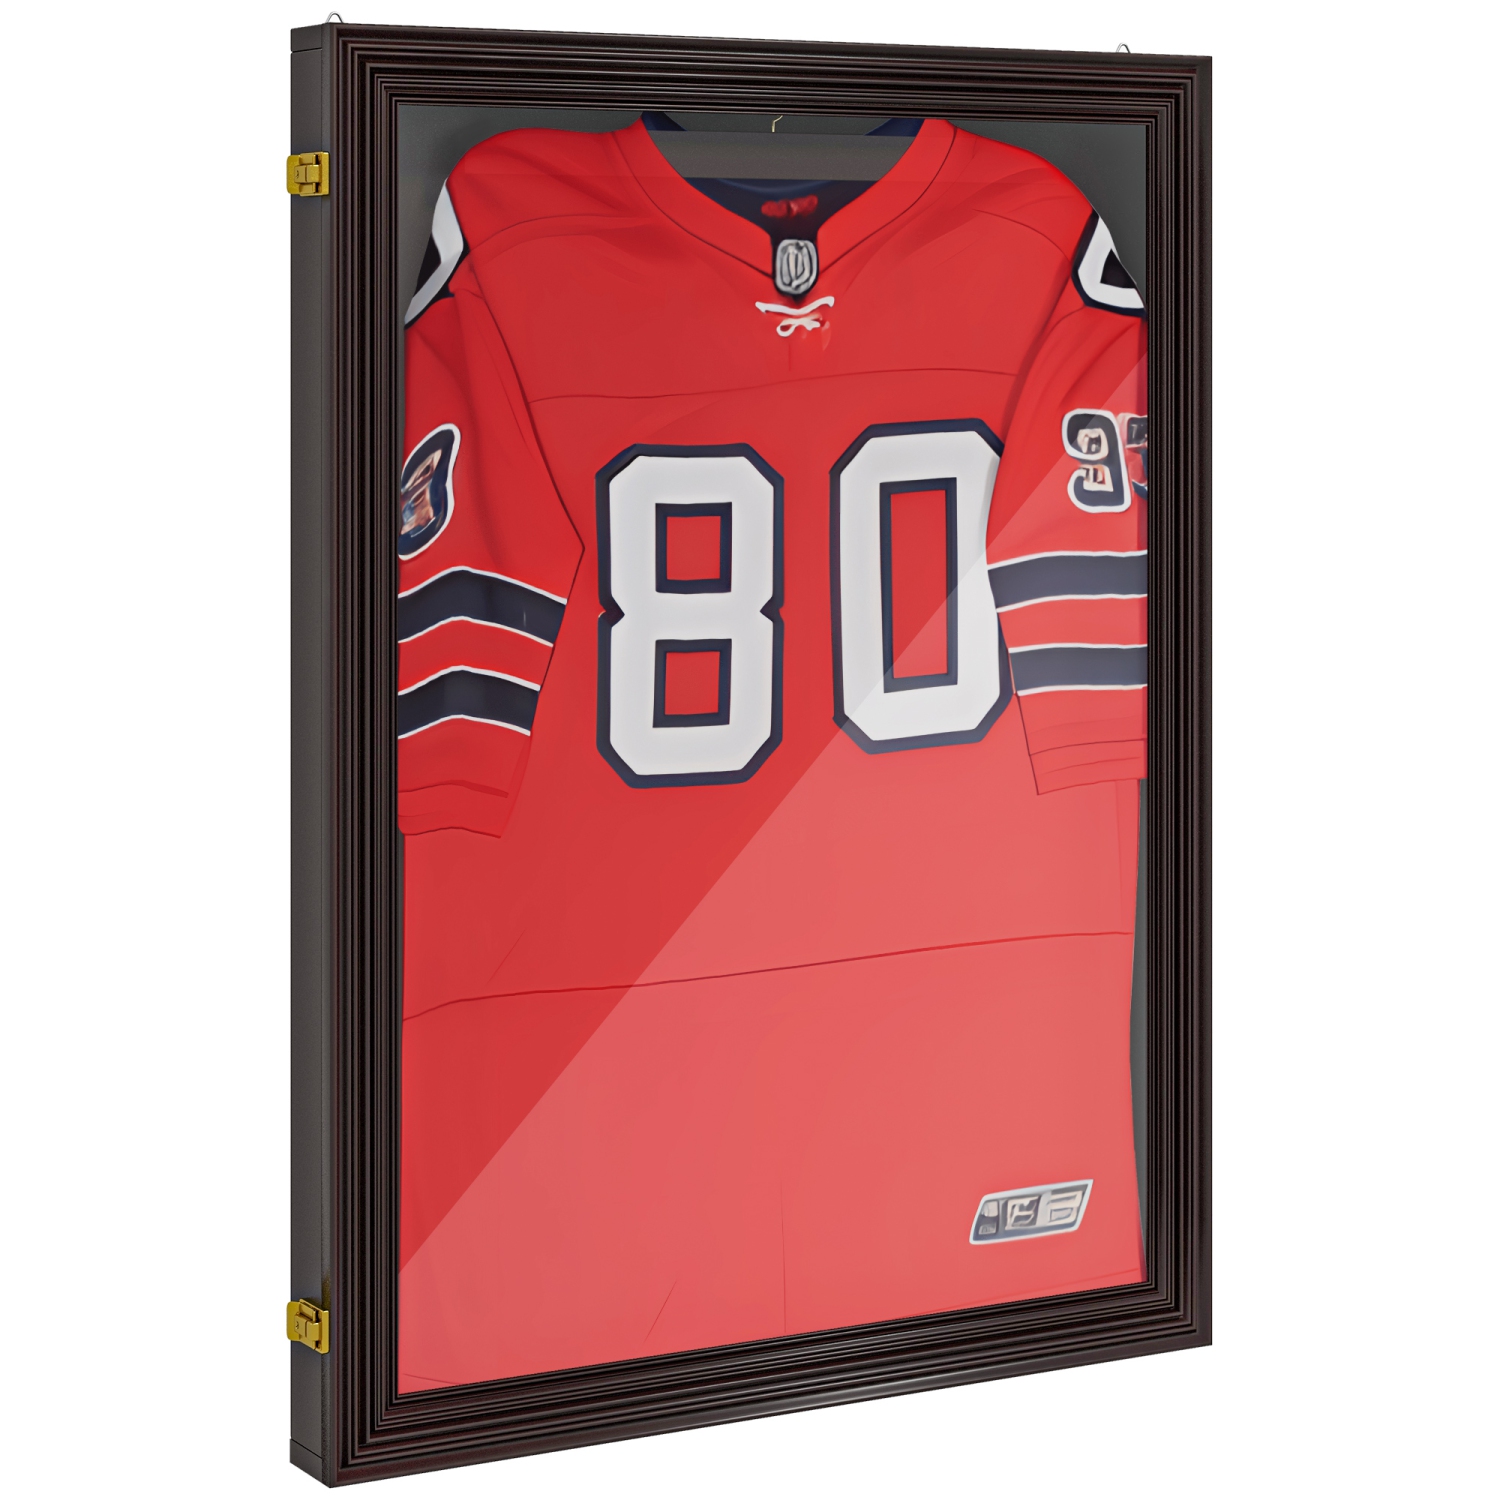 HOMCOM Jersey Display Frame Case, Acrylic Sports Shirt Shadow Box for Basketball Football Baseball (Brown, 26" W x 35" H)